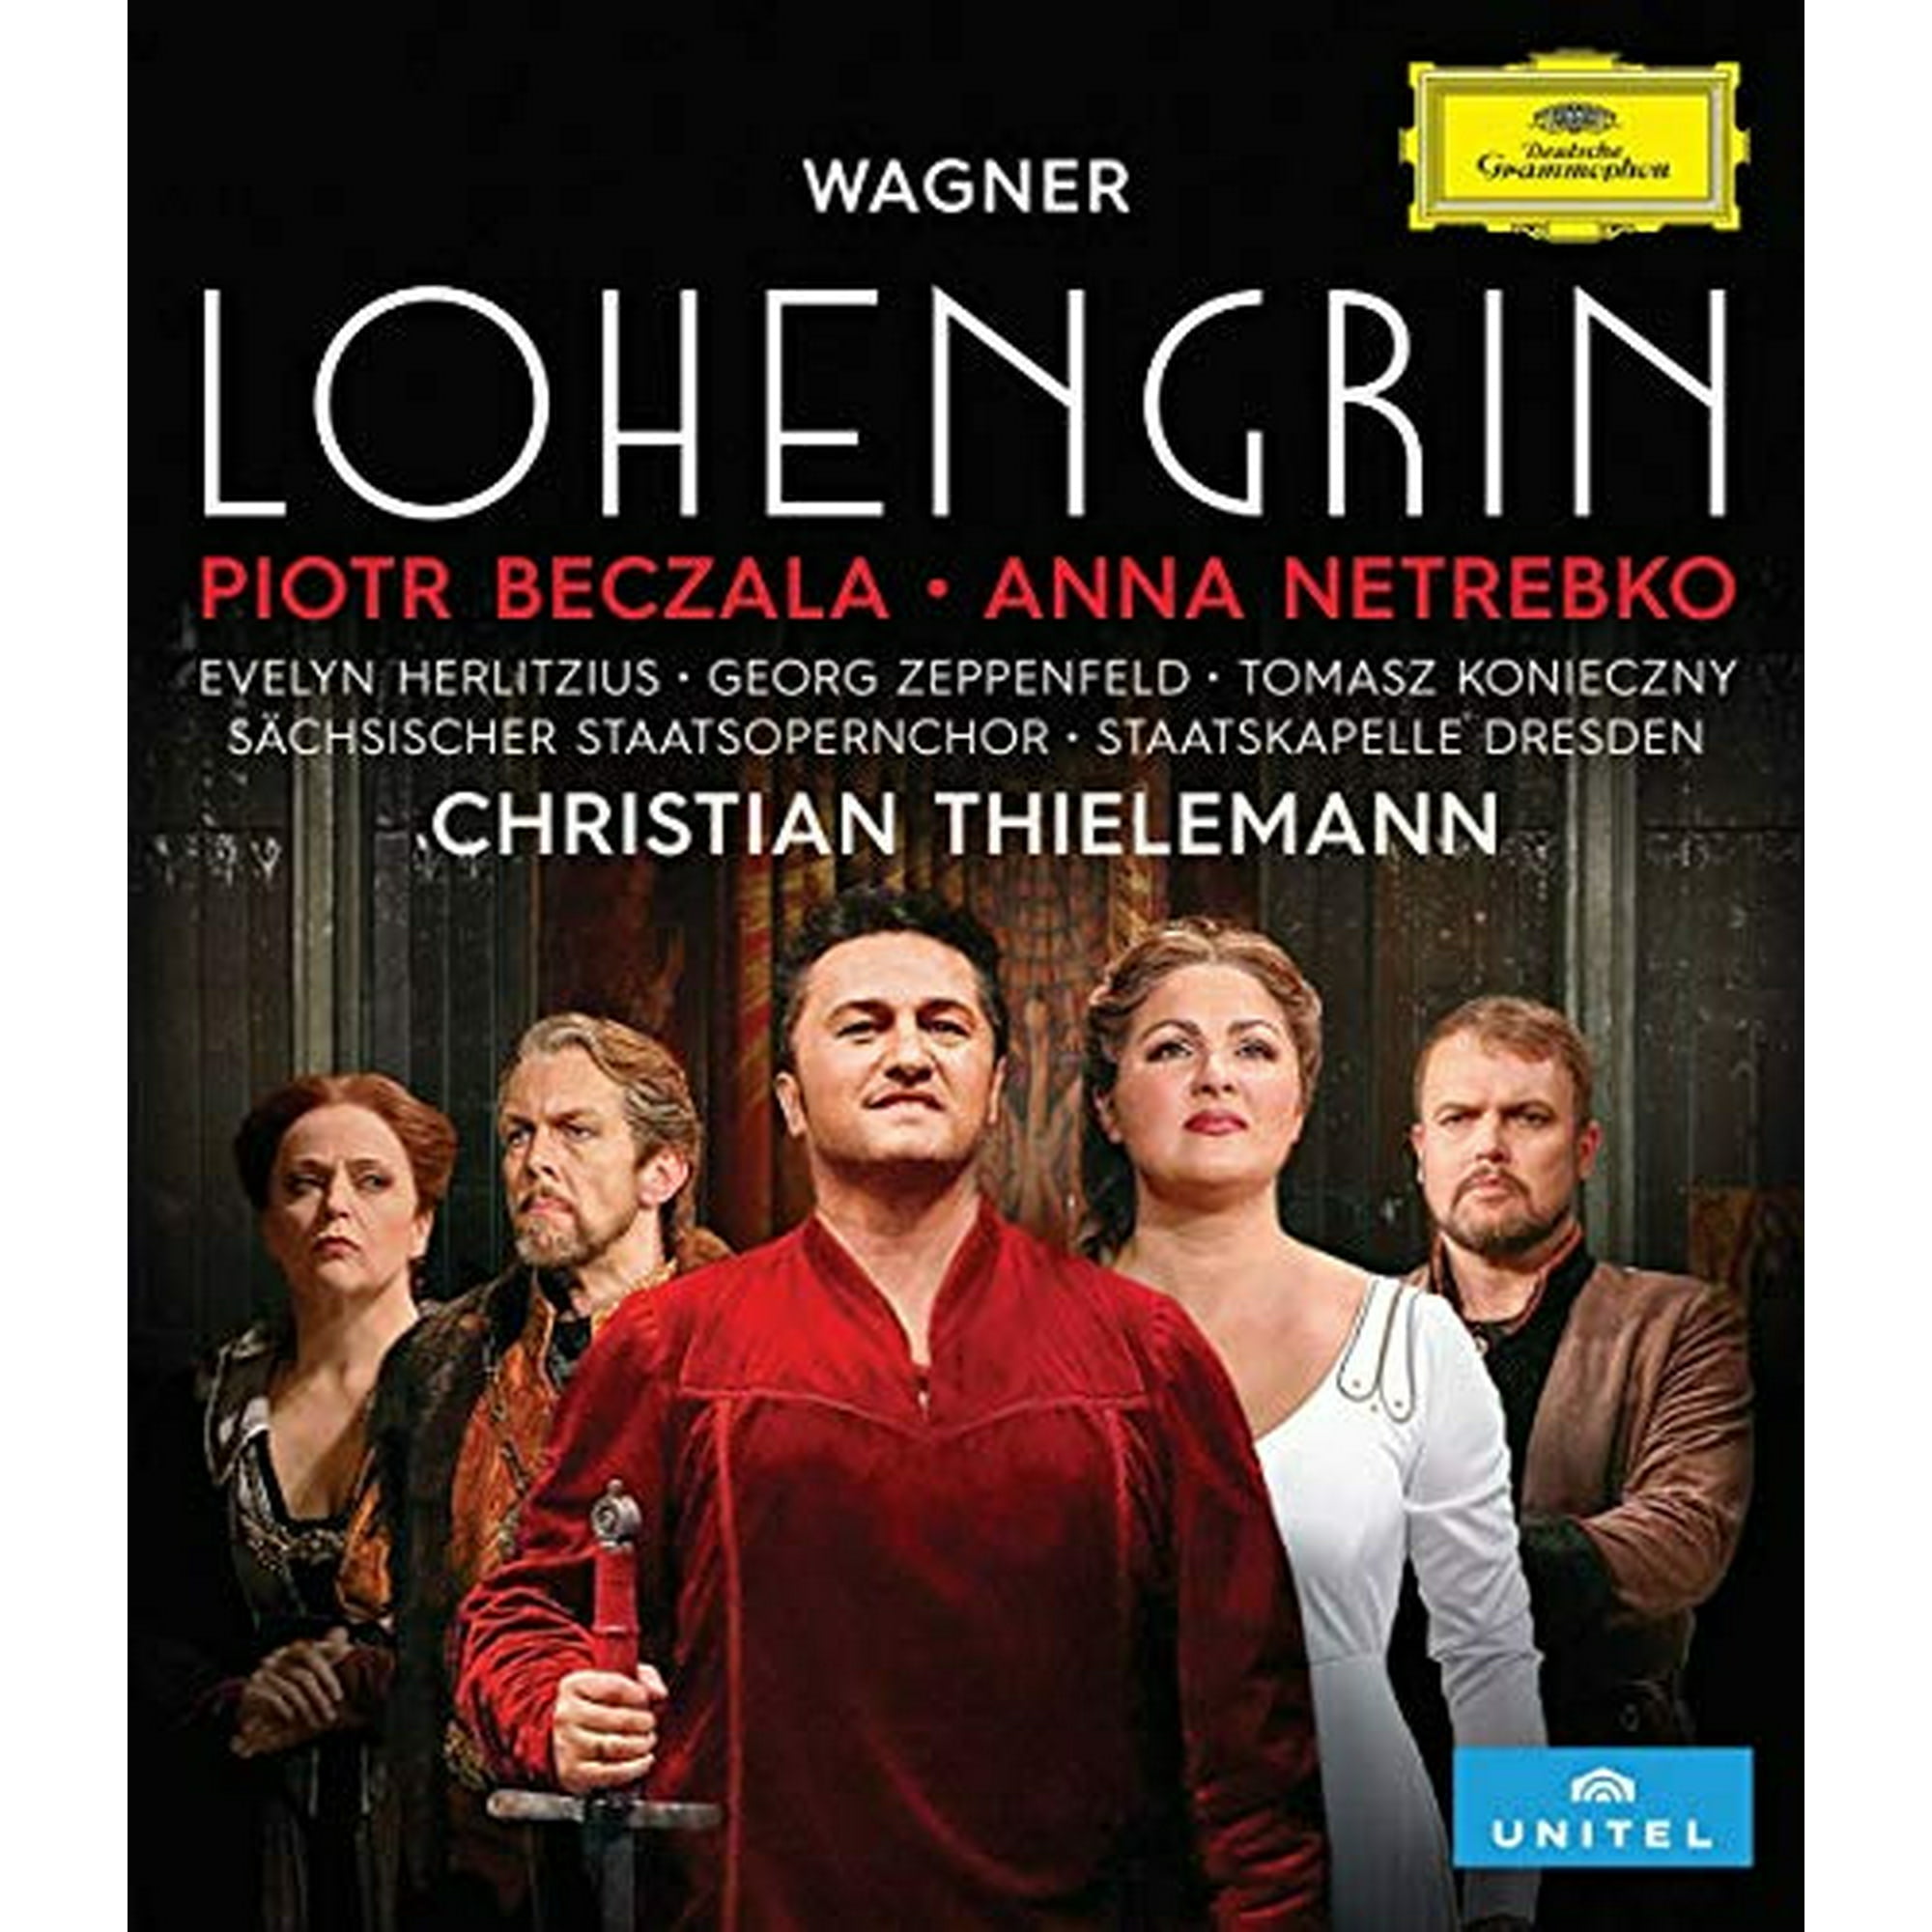 Lohengrin Wwv 75 [Blu-ray] n5ksbvb-